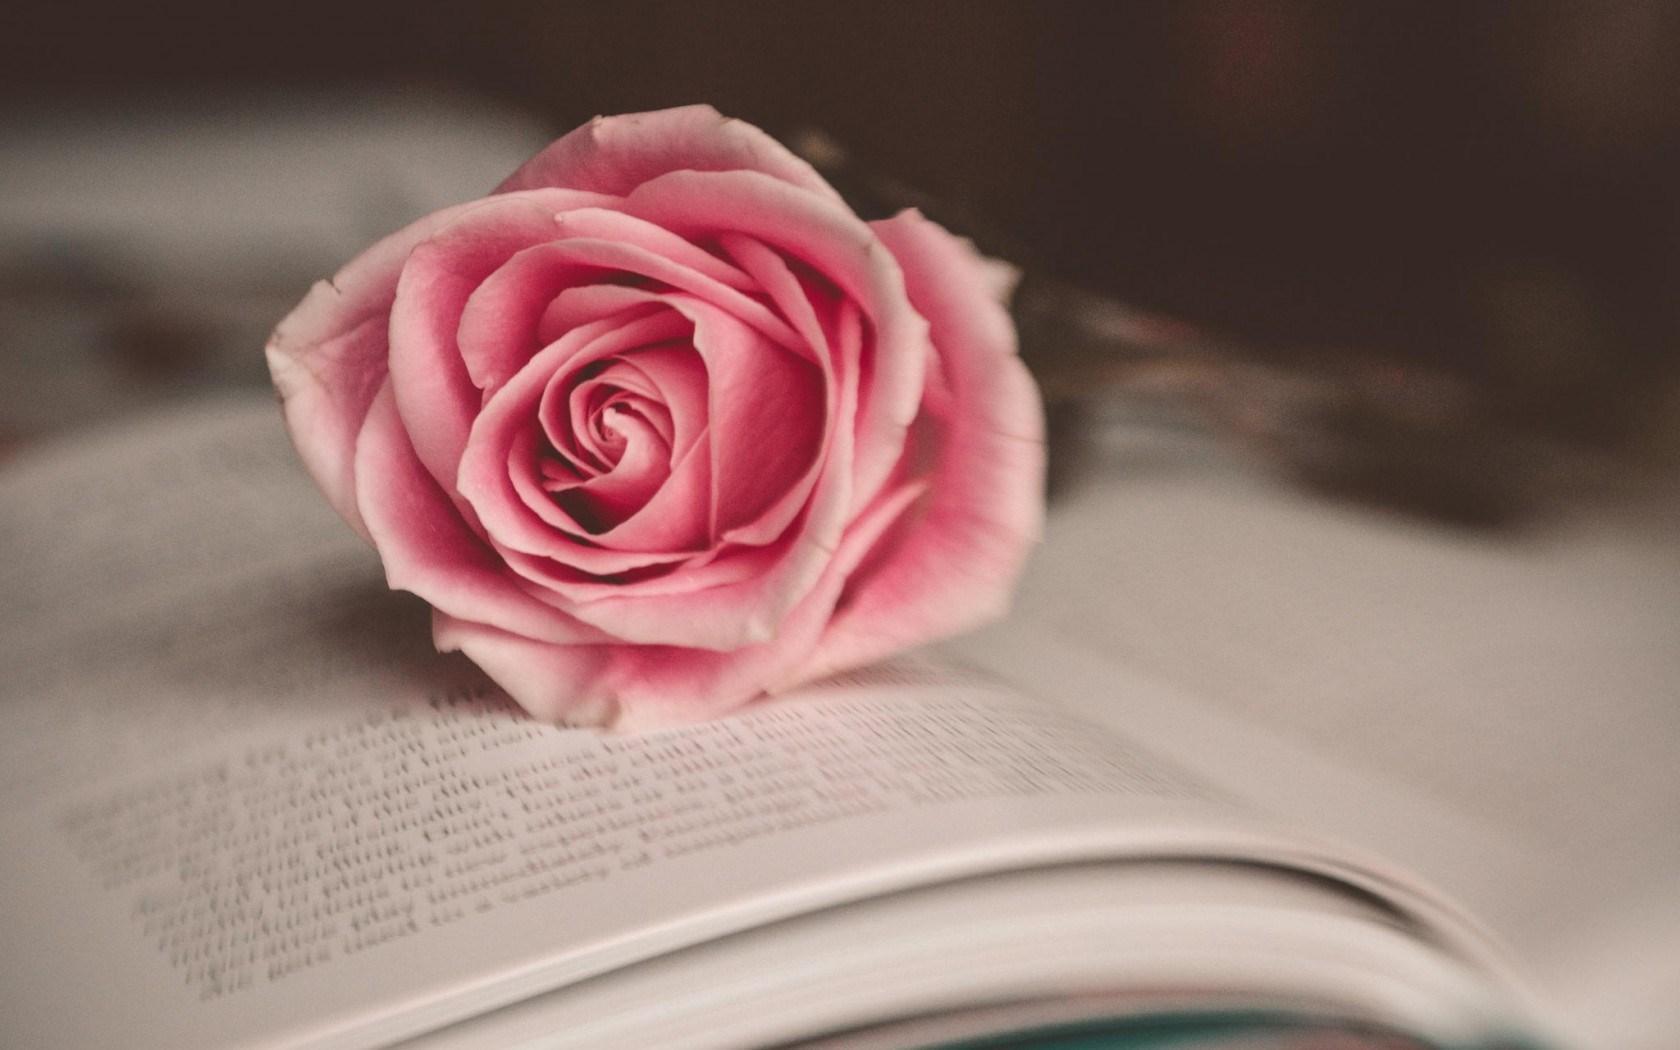 flower-pink-rose-book-mood.jpg